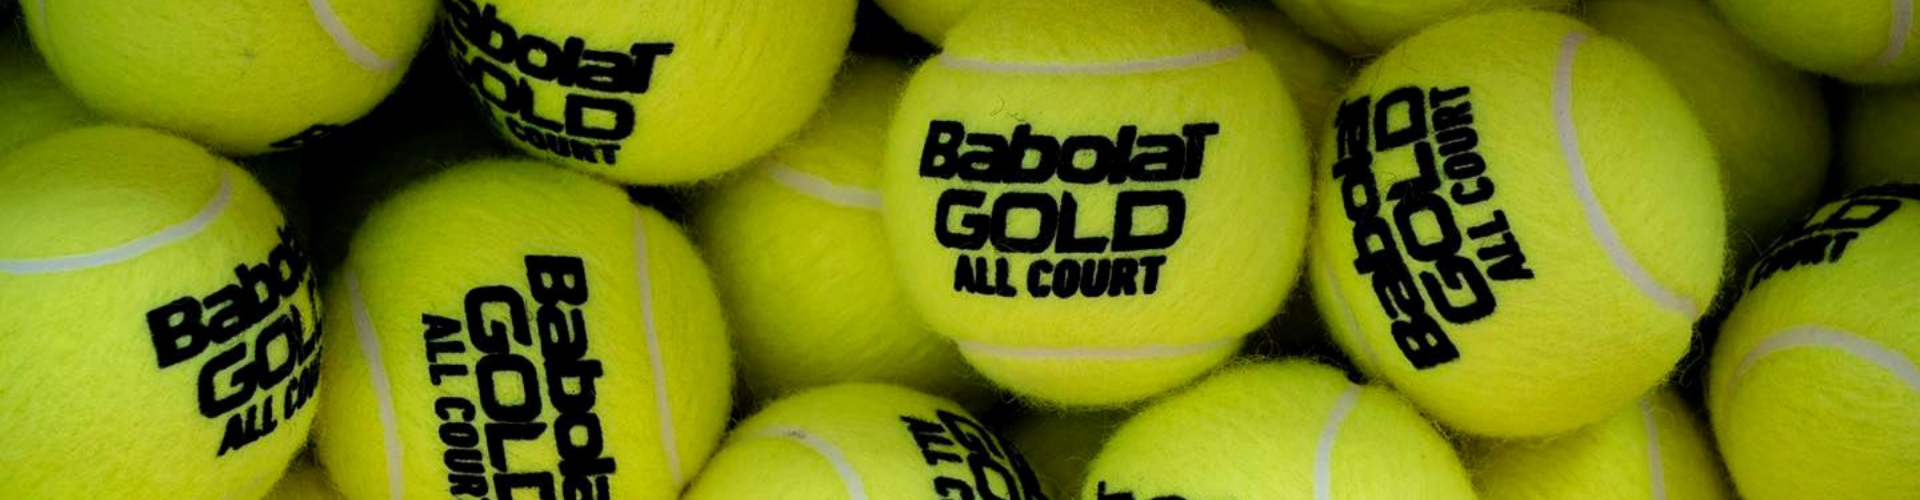 Babolat Tennis Balls-All Things Tennis - UK'S LEADING TENNIS SHOP